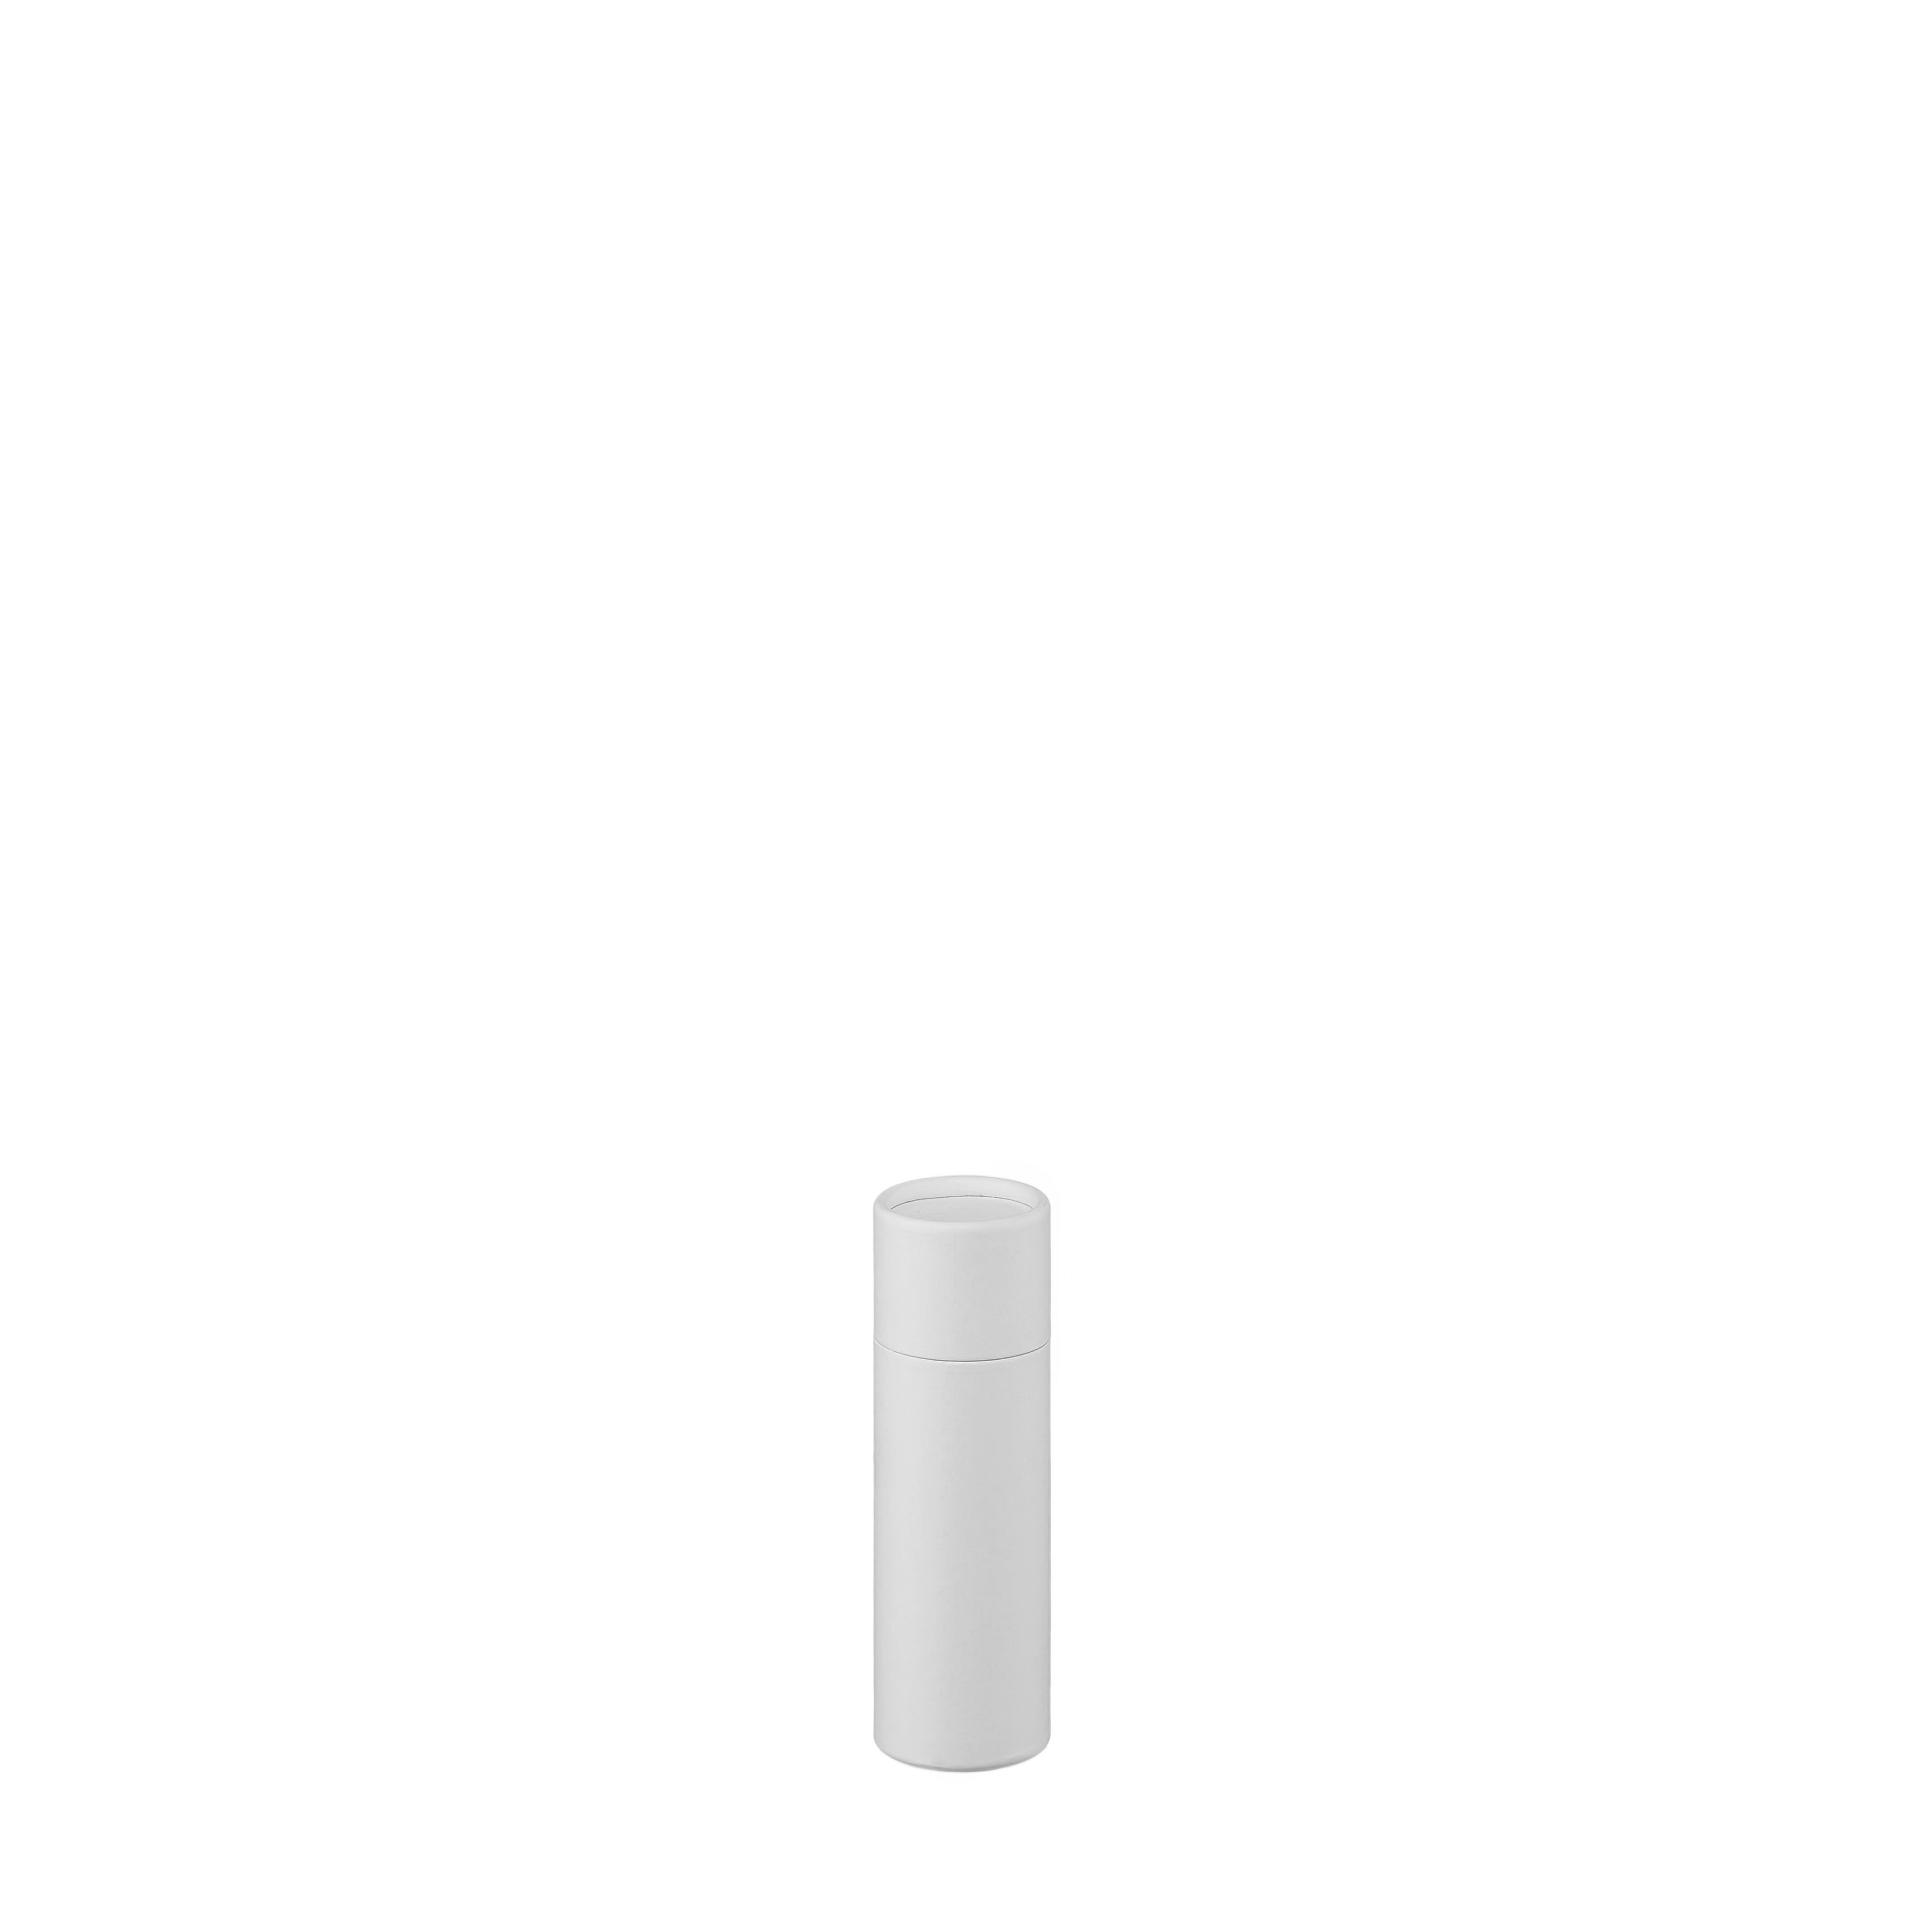 100 Pappdosen weiß | 110 x 34 mm I food grade